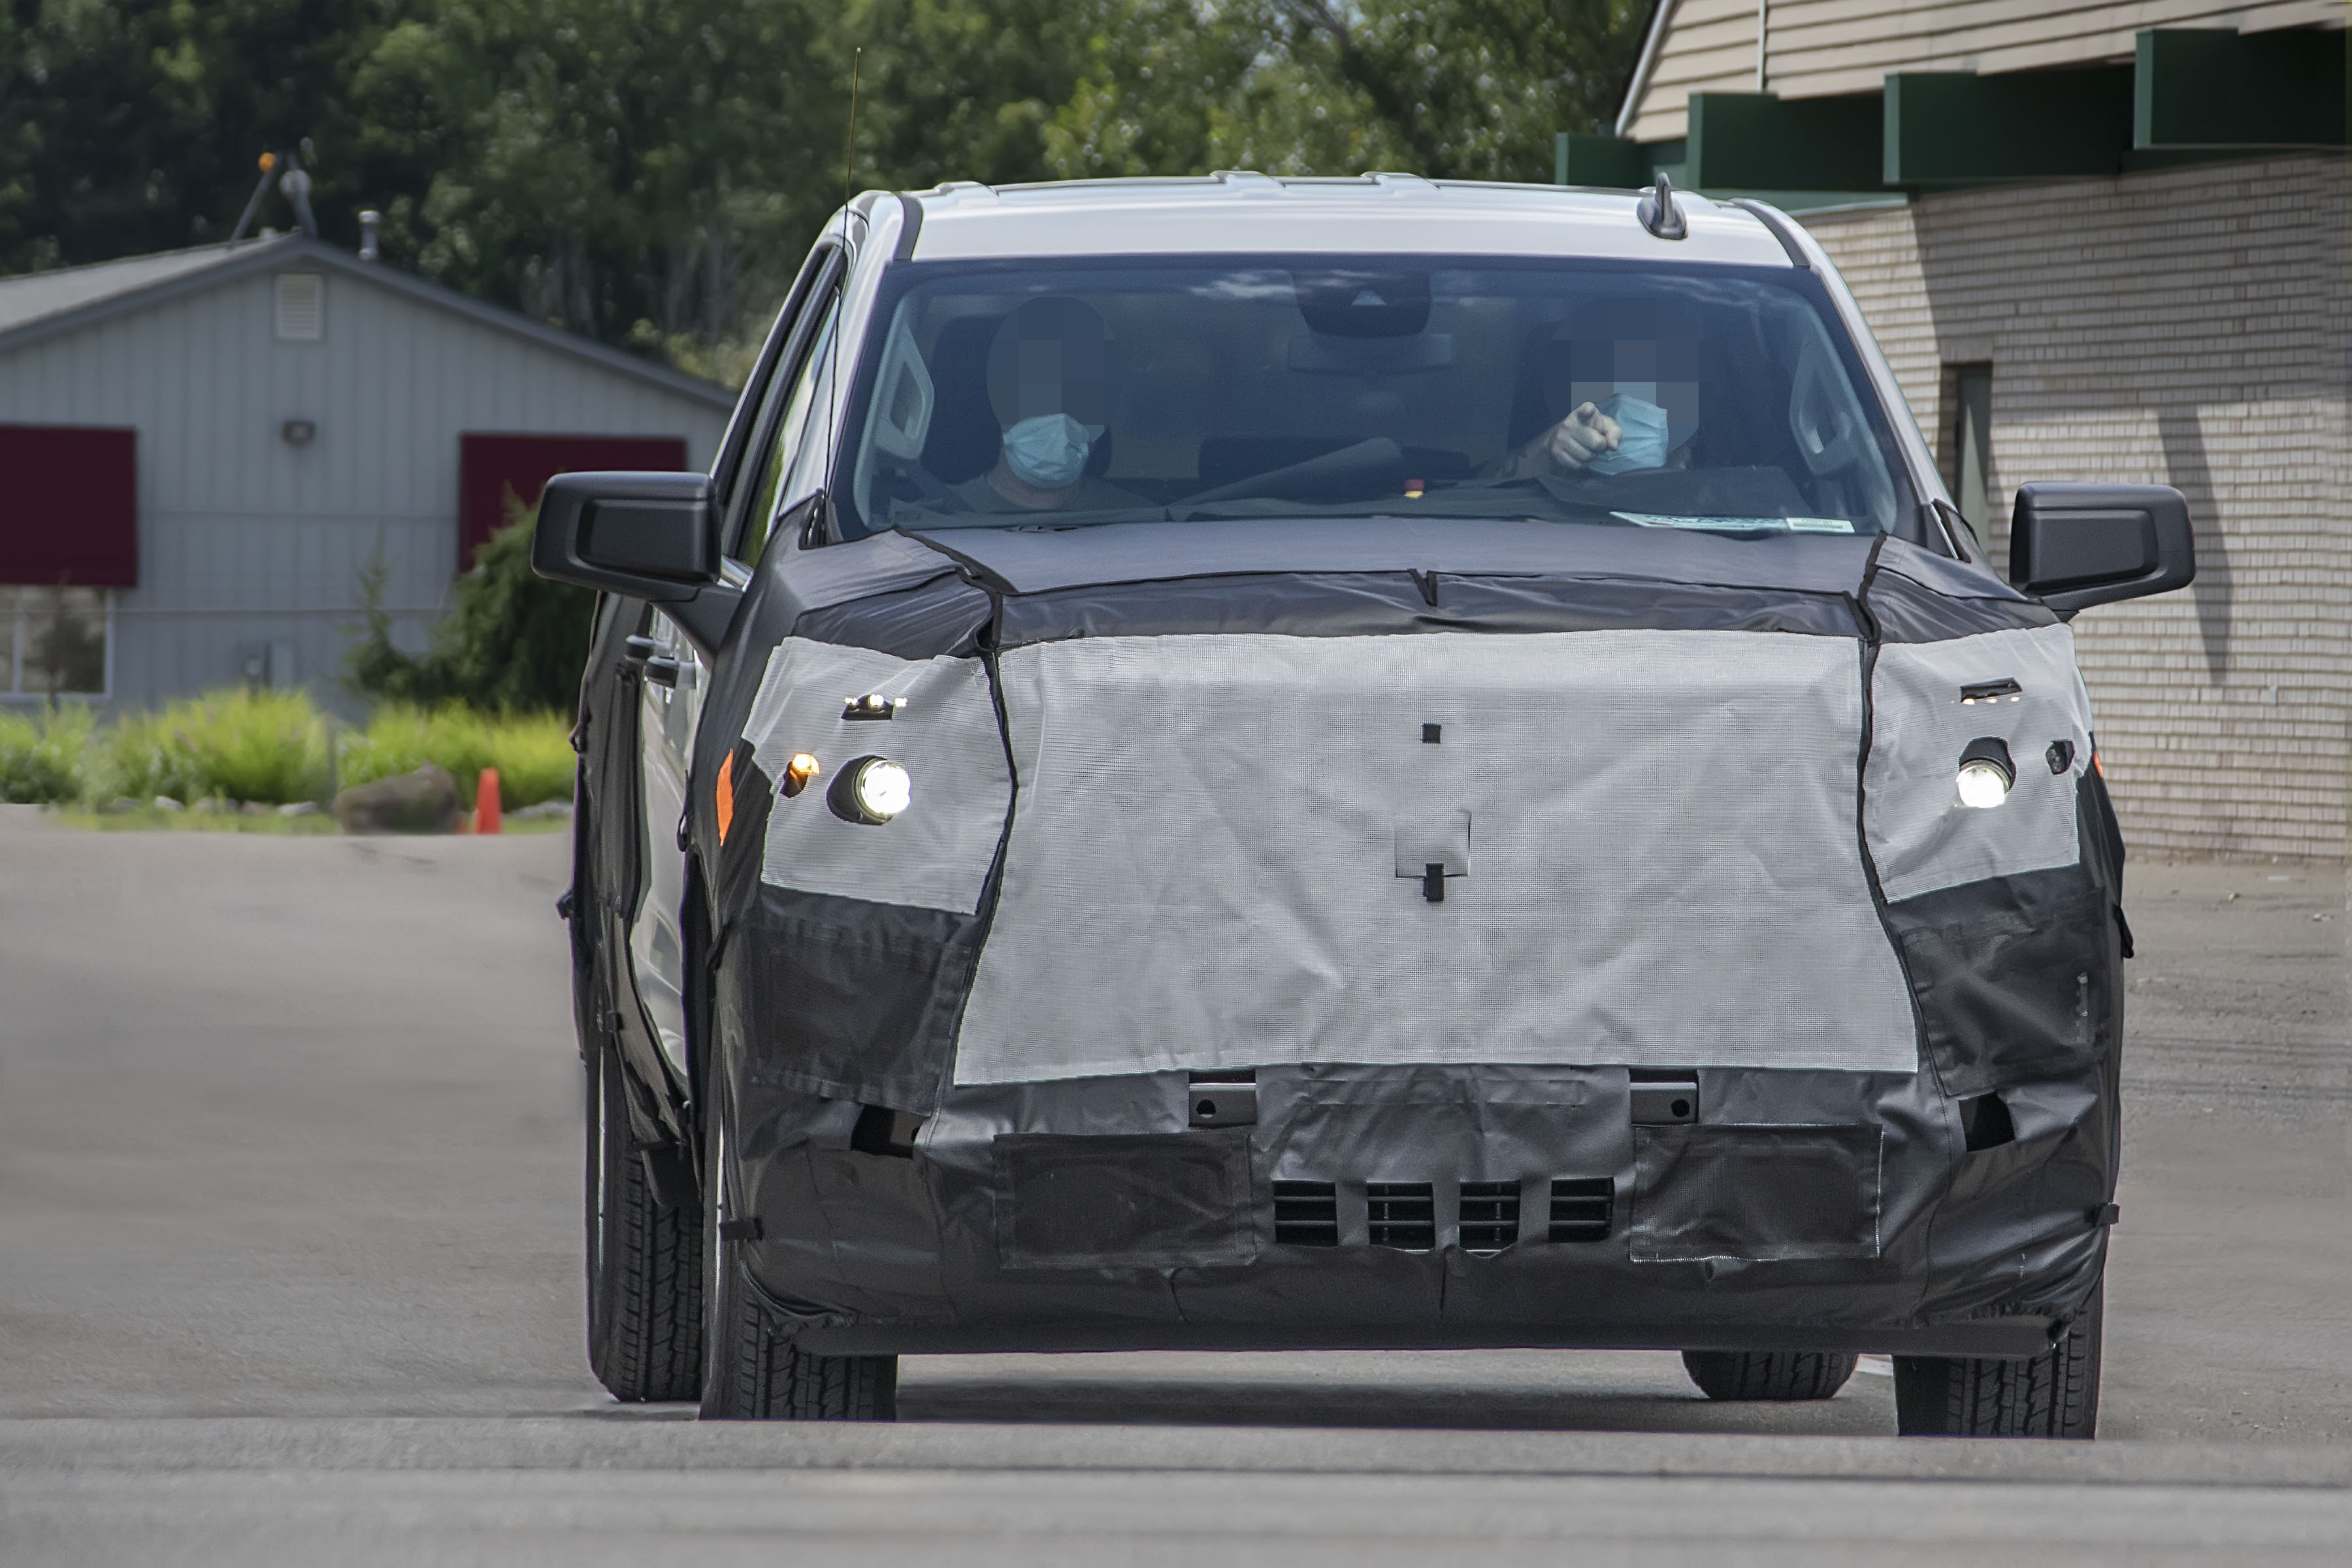 2022 Chevy Silverado Prototype Caught - Spyshot